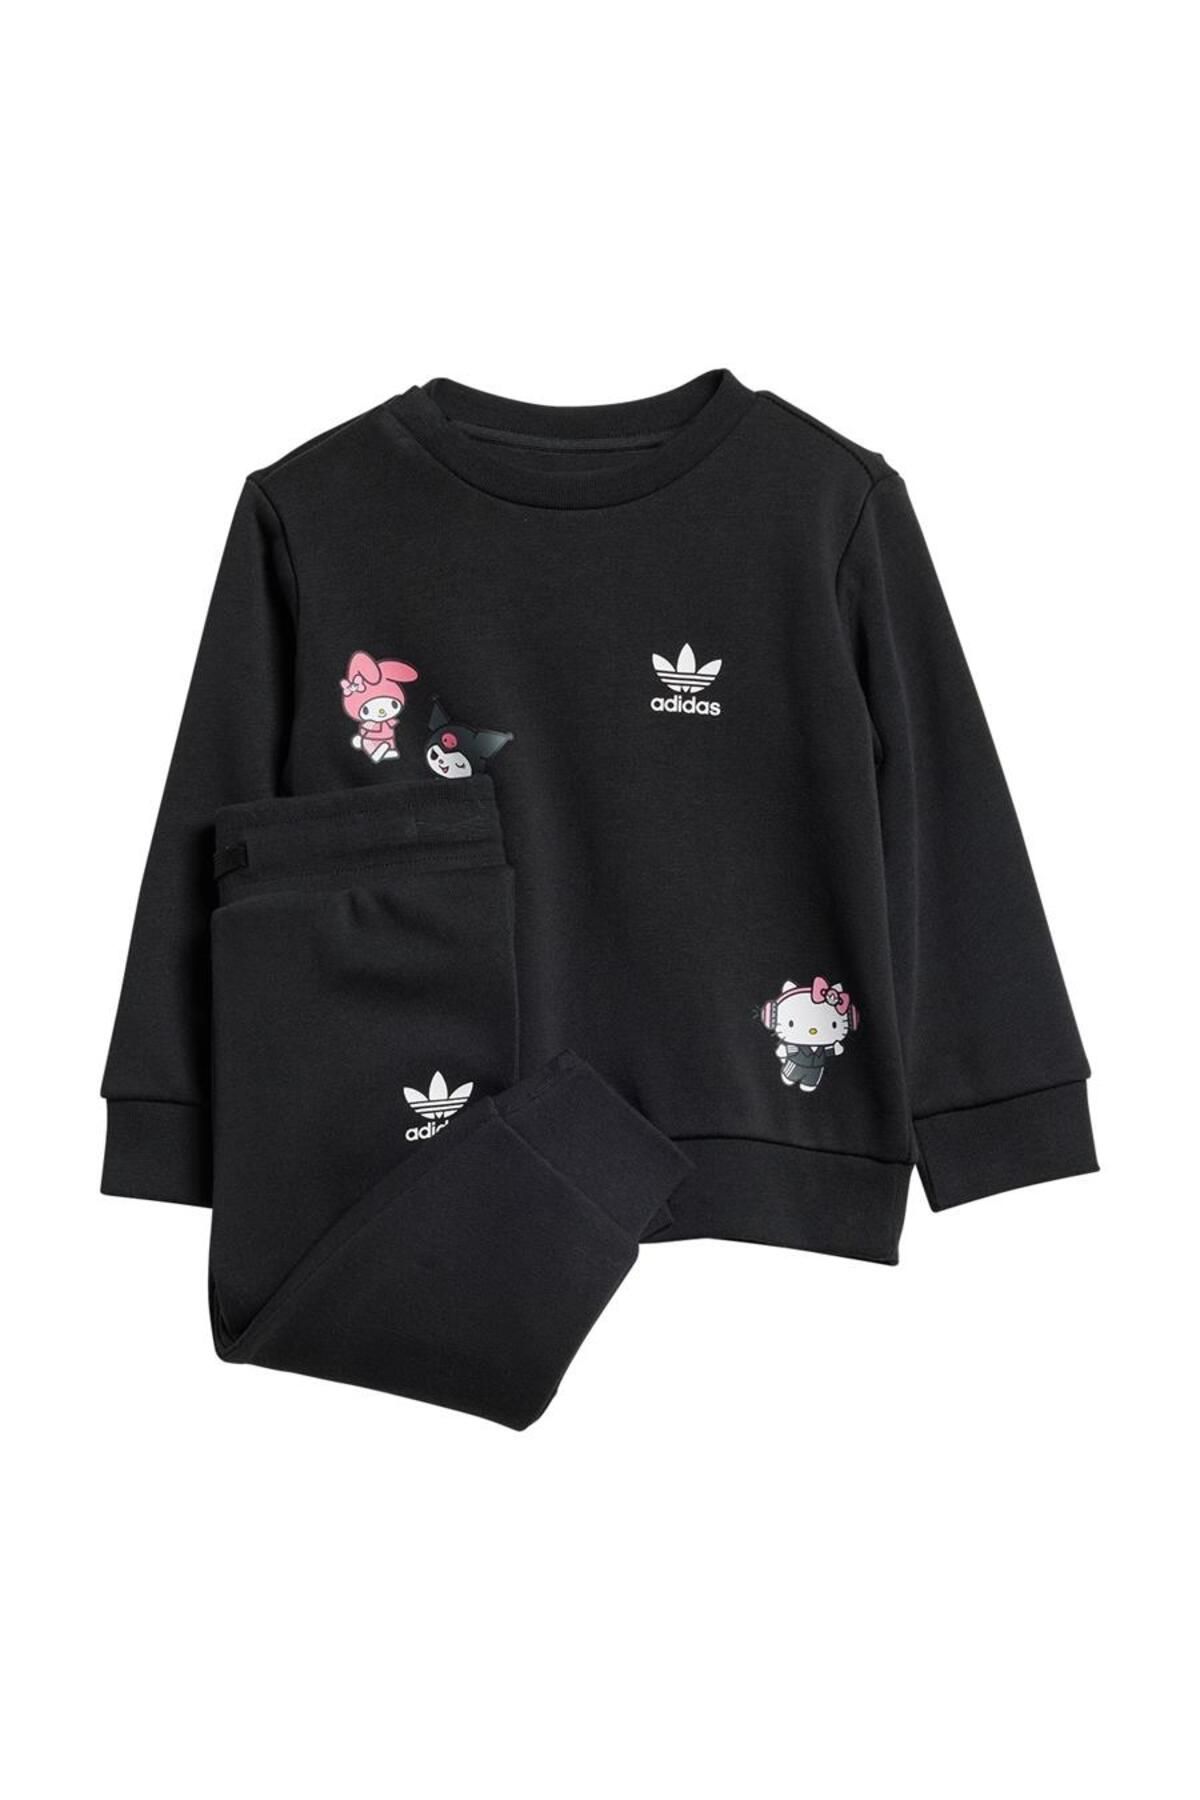 adidas Originals X Hello Kitty Bebek Siyah Eşofman Takımı (IR6790)